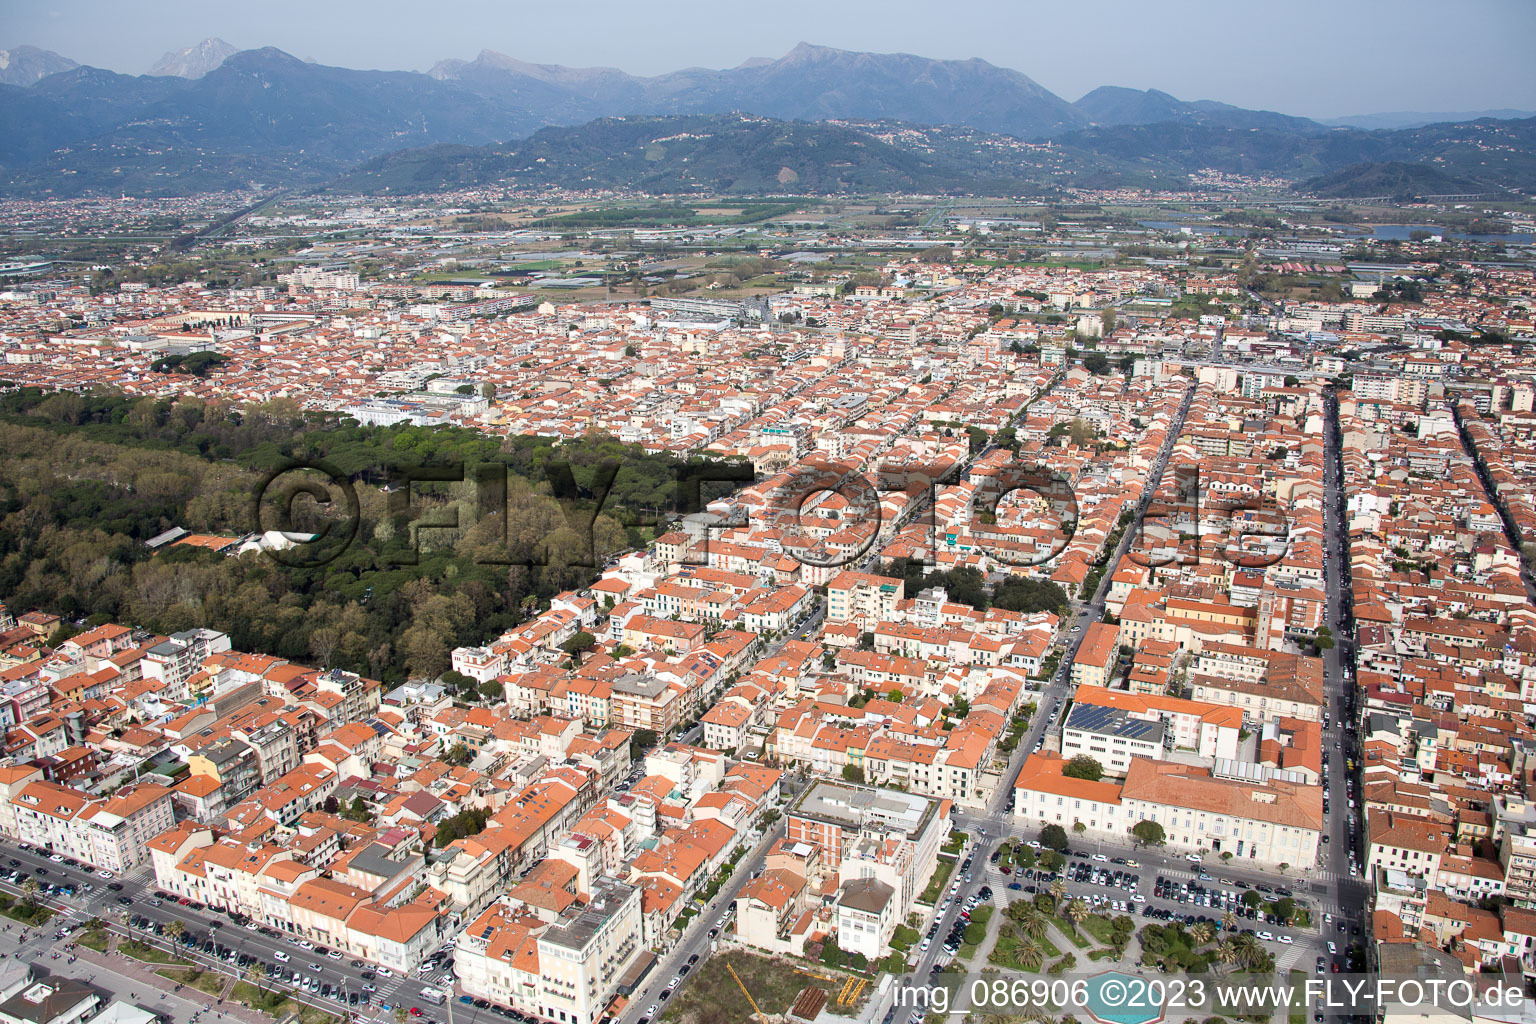 Viareggio in the state Tuscany, Italy seen from a drone